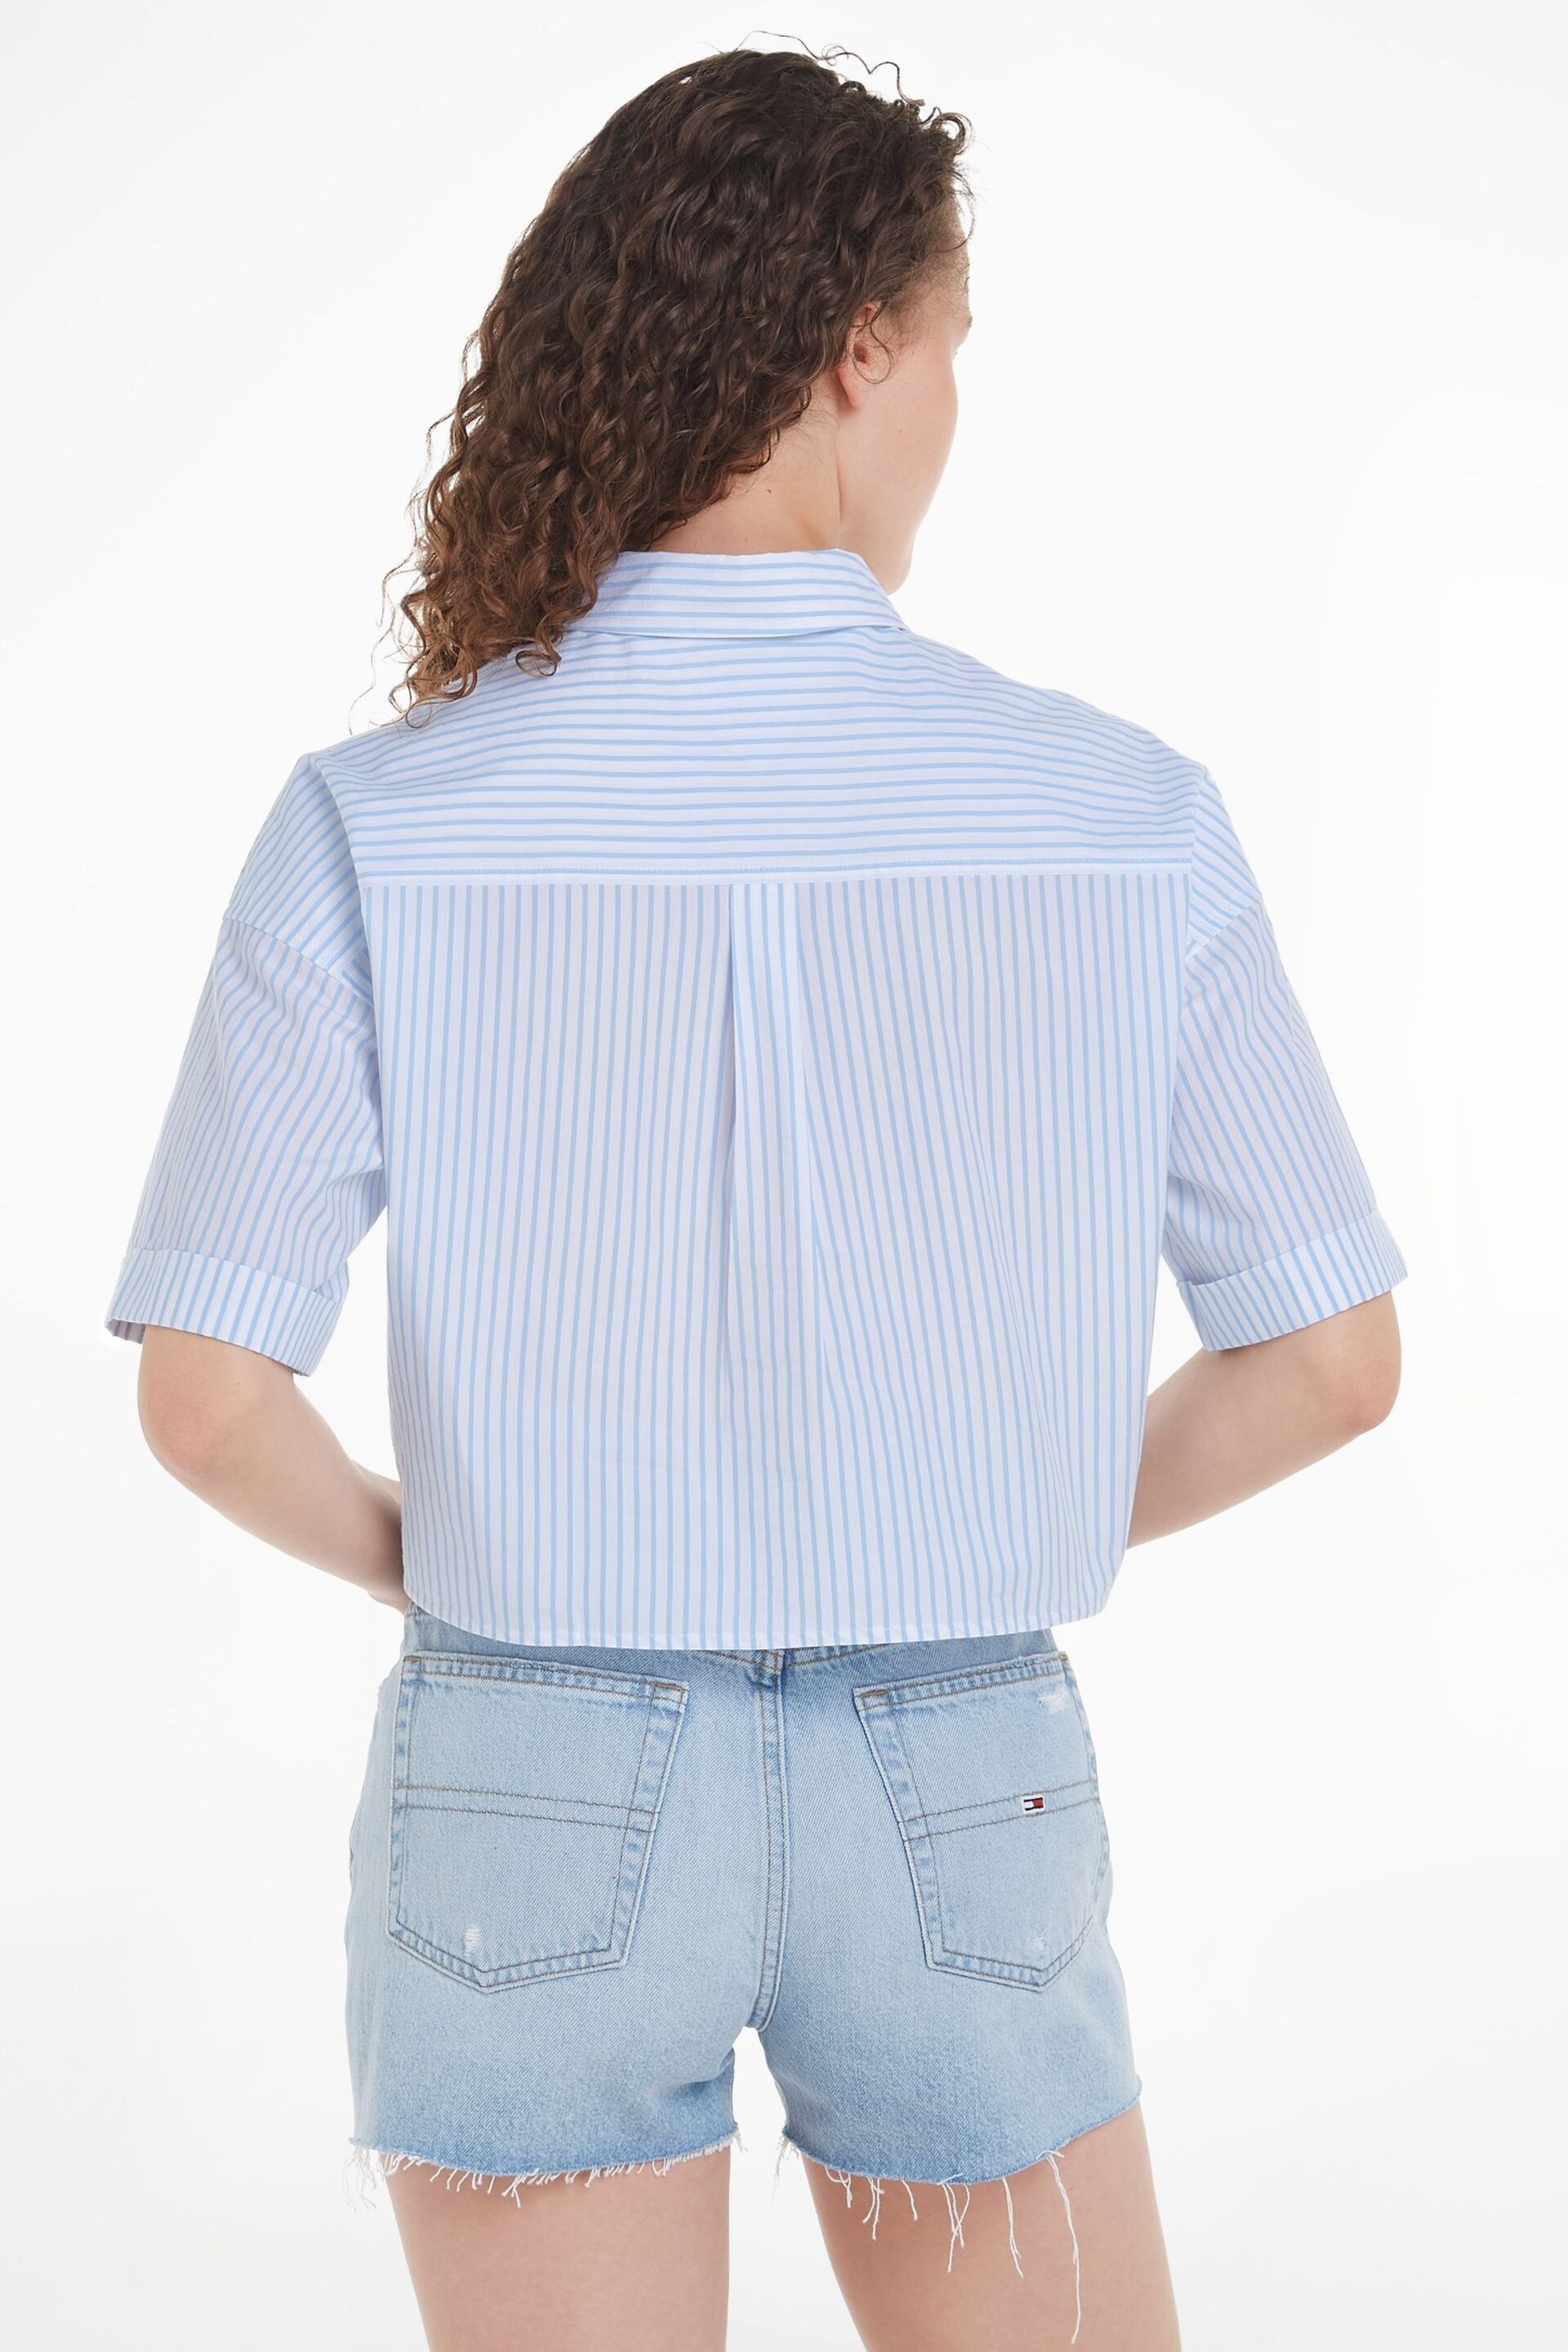 Tommy Jeans Blue Knot Stripe Shirt - Image 2 of 6